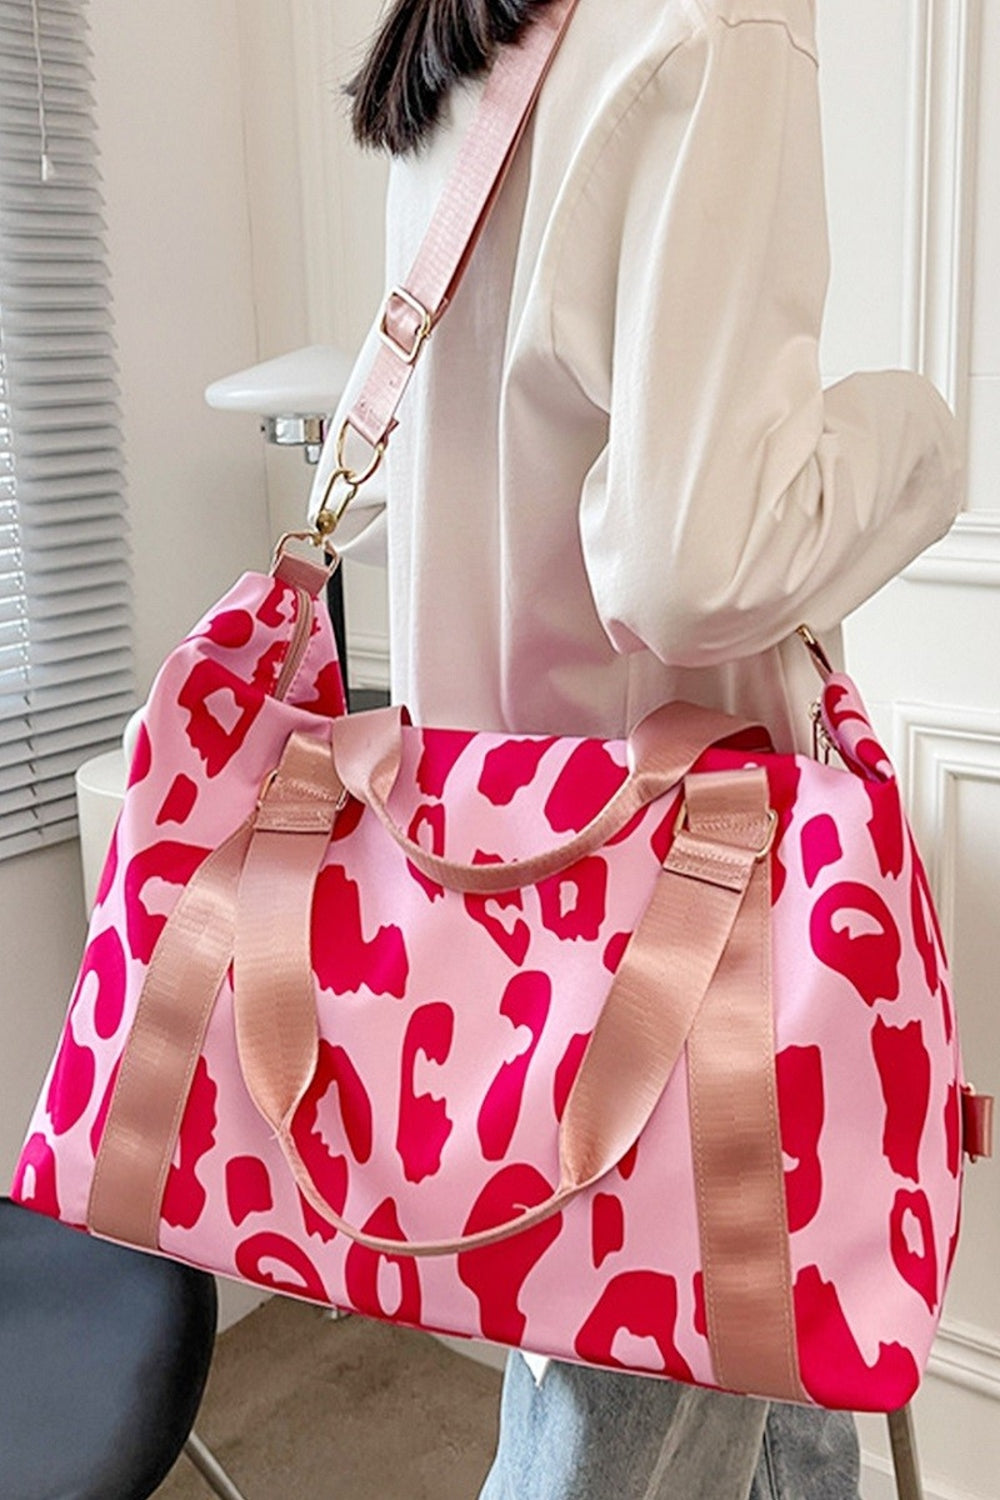 Pink Leopard Travel Duffle Bag